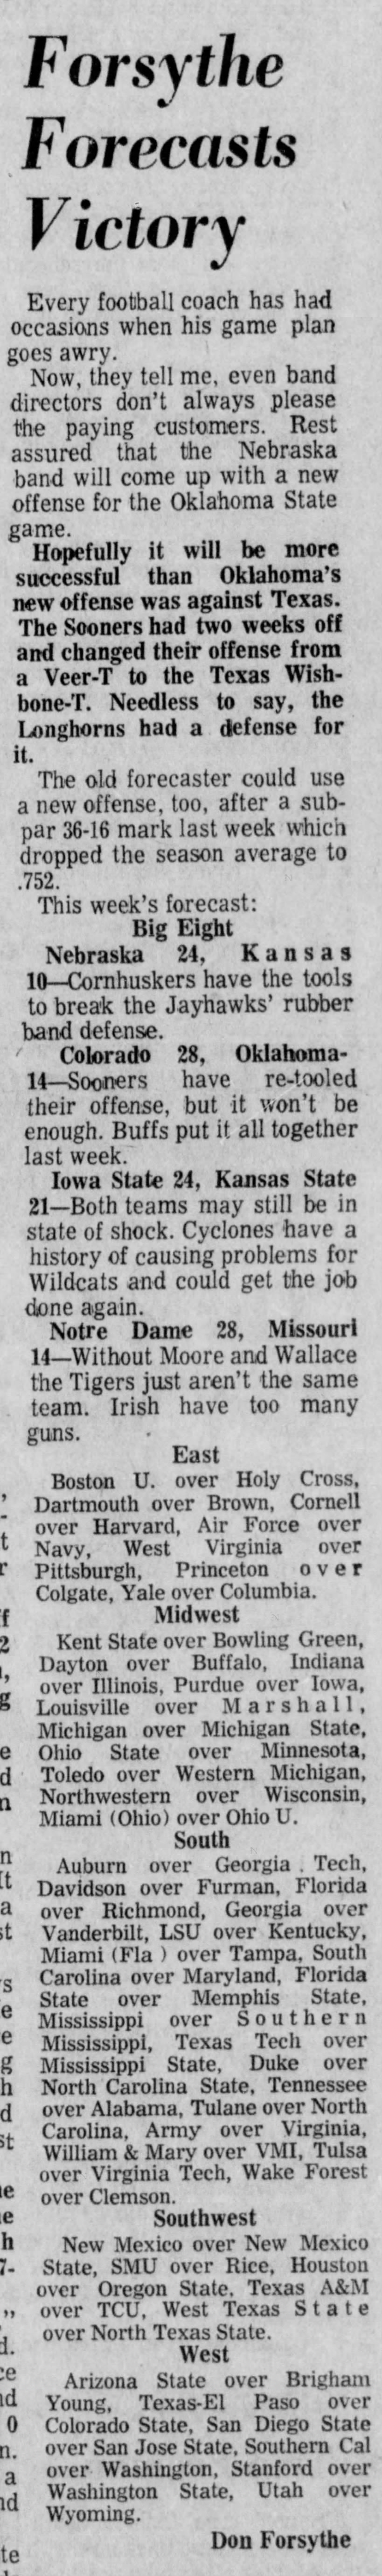 1970.10.16 Nebraska-Kansas prediction